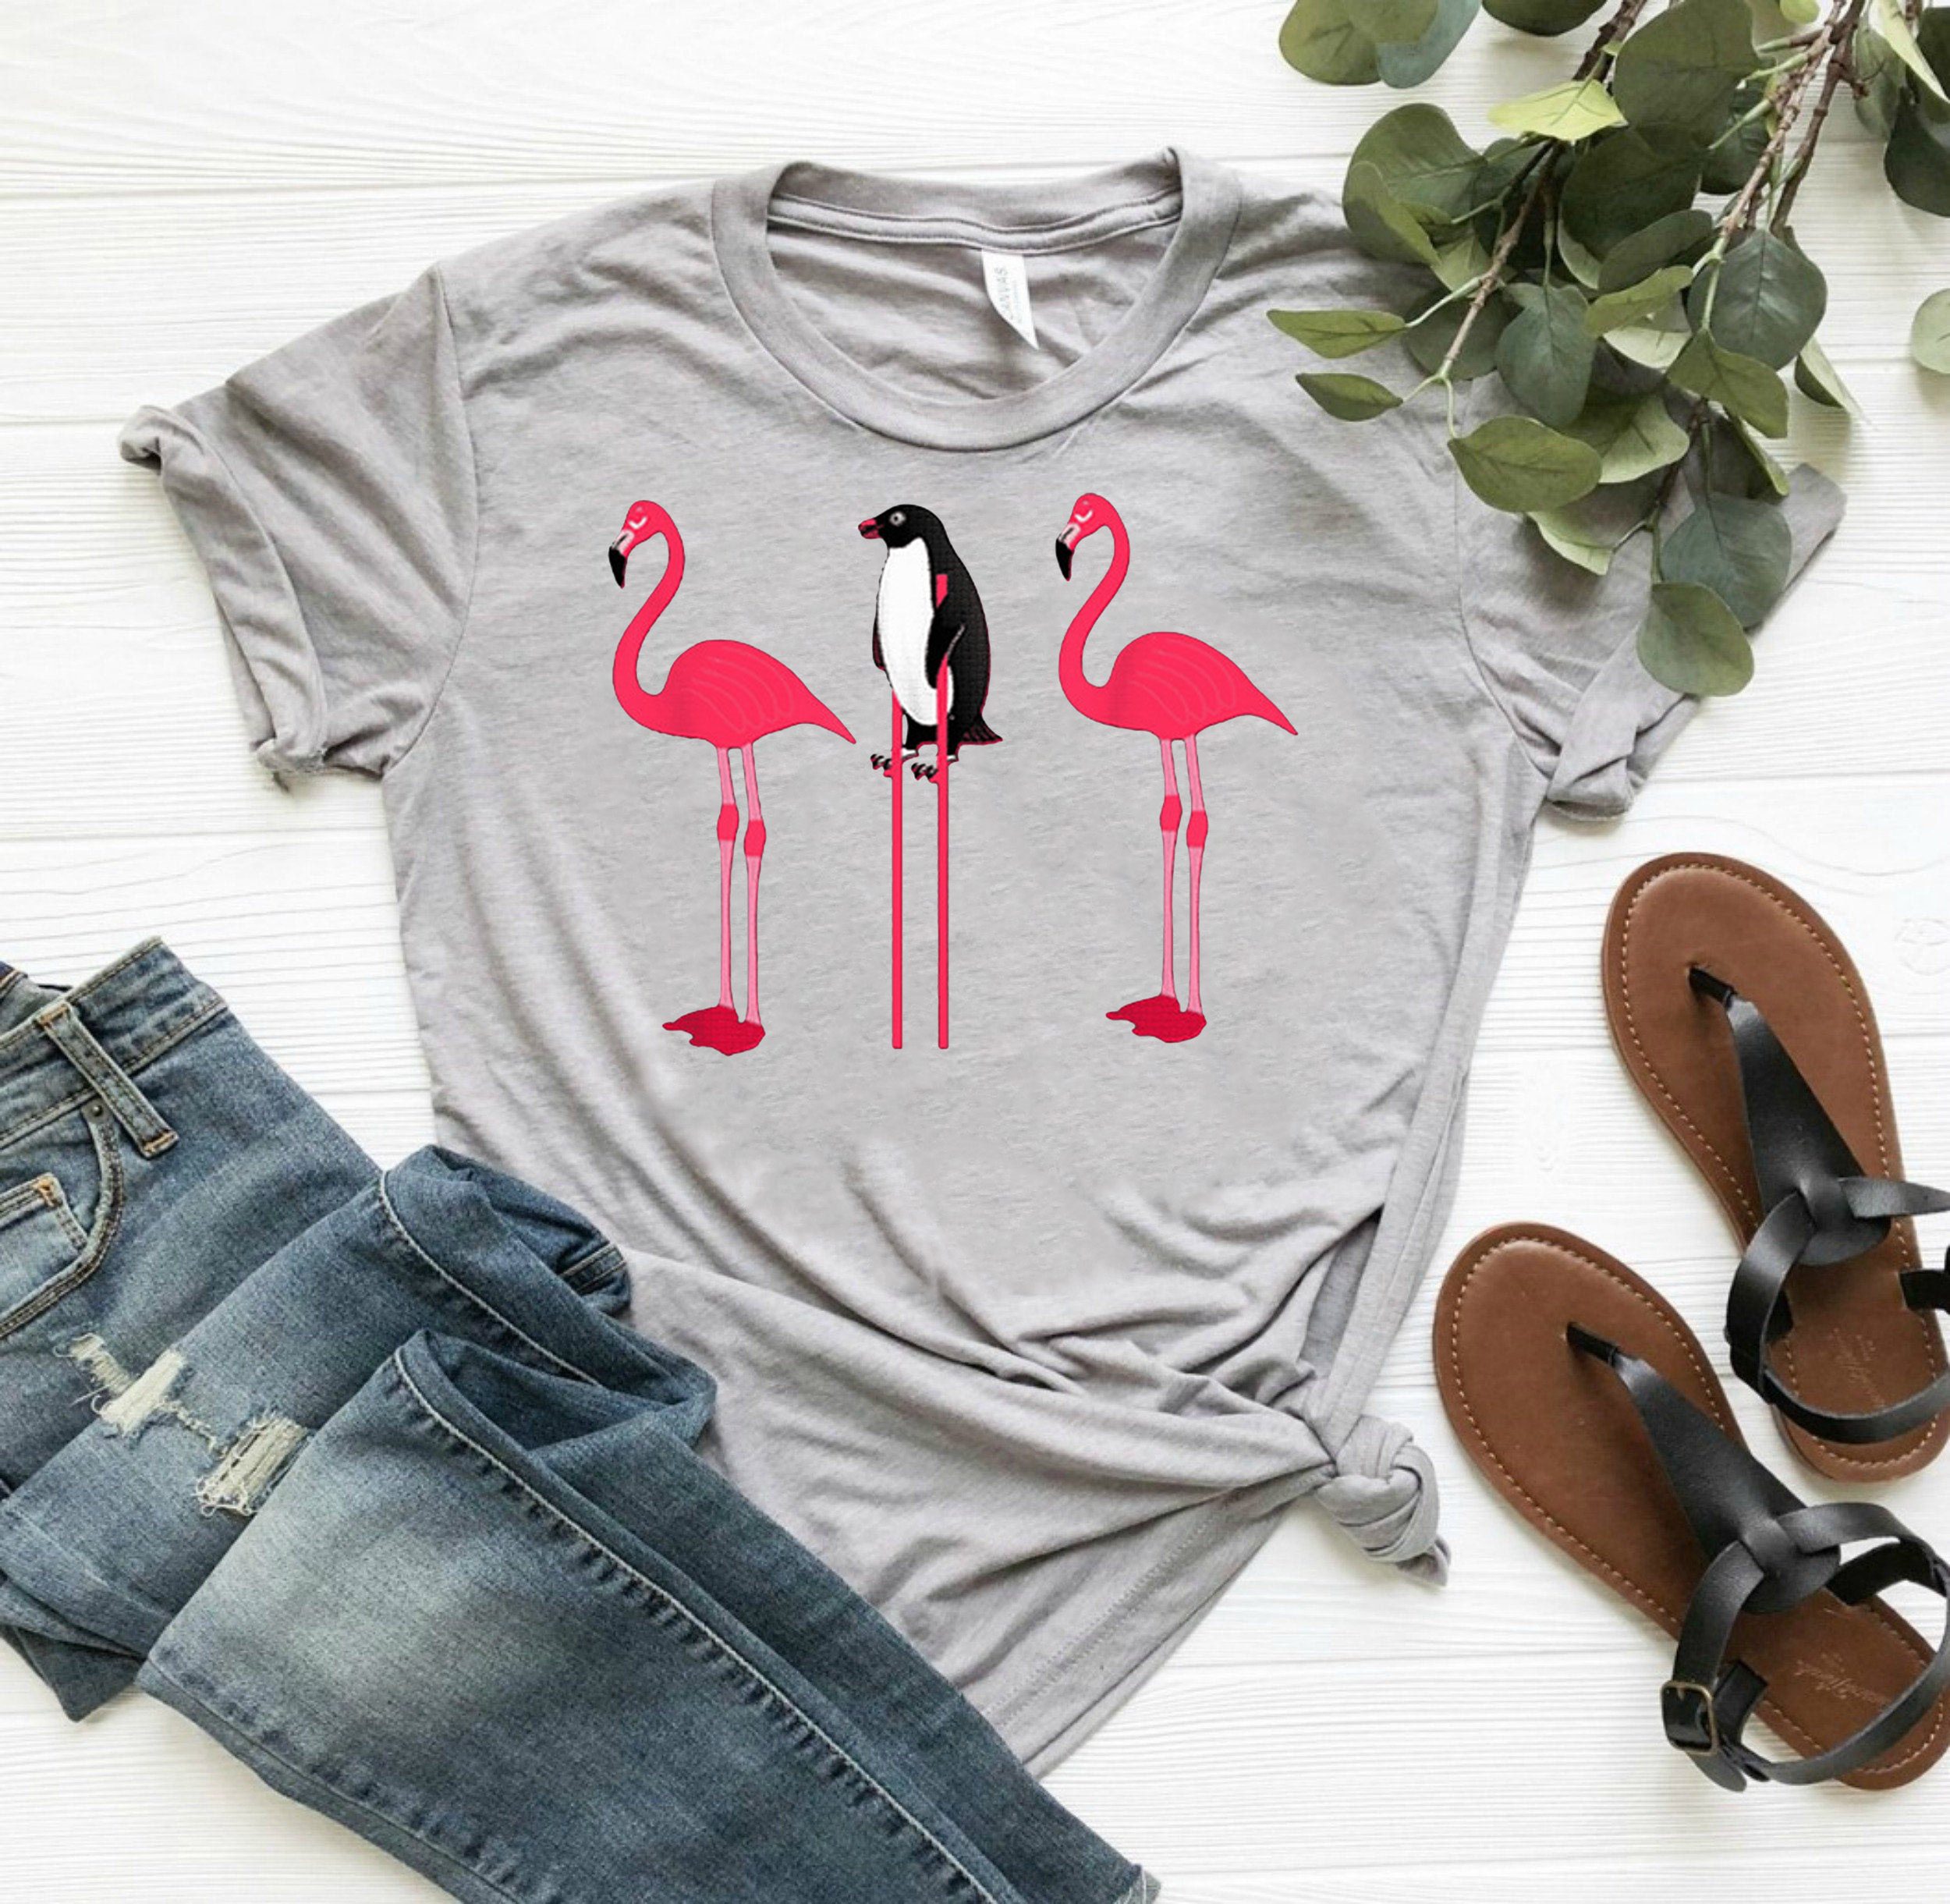 Flamingos and penguins shirt - OrderQuilt.com